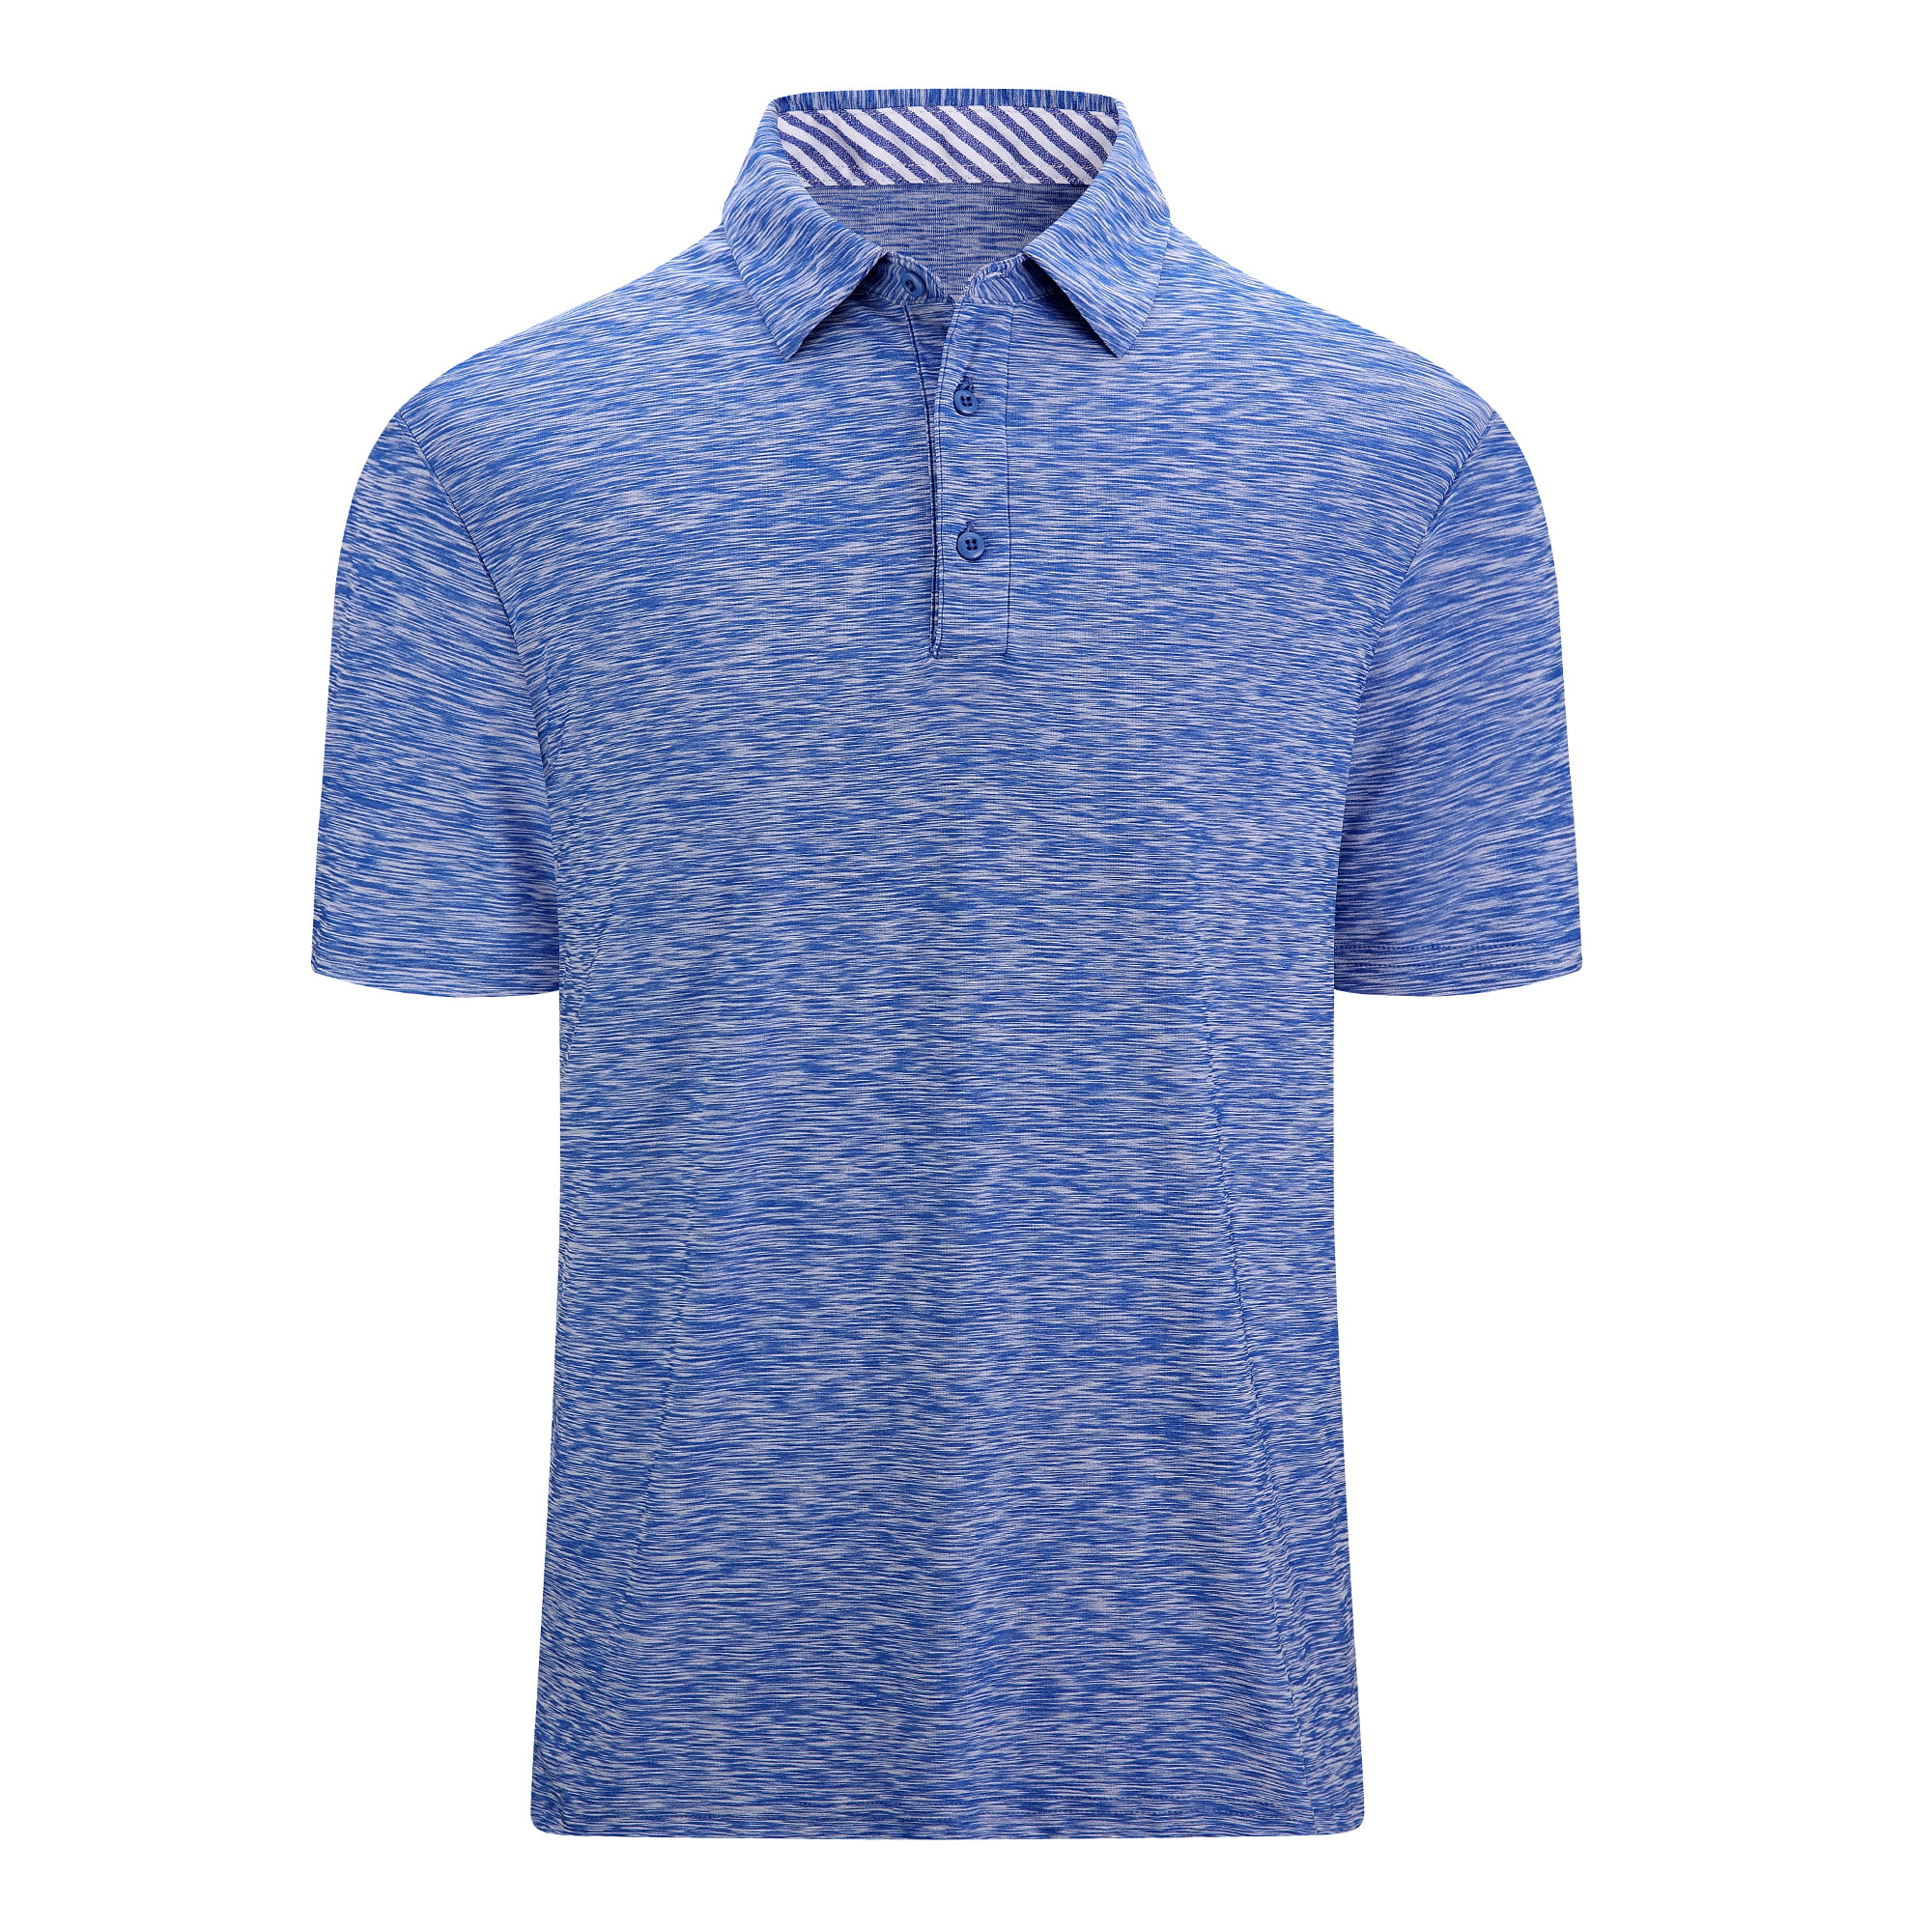 Damipow Men's Golf Shirts for Men | Short Sleeve Performance Polo ...